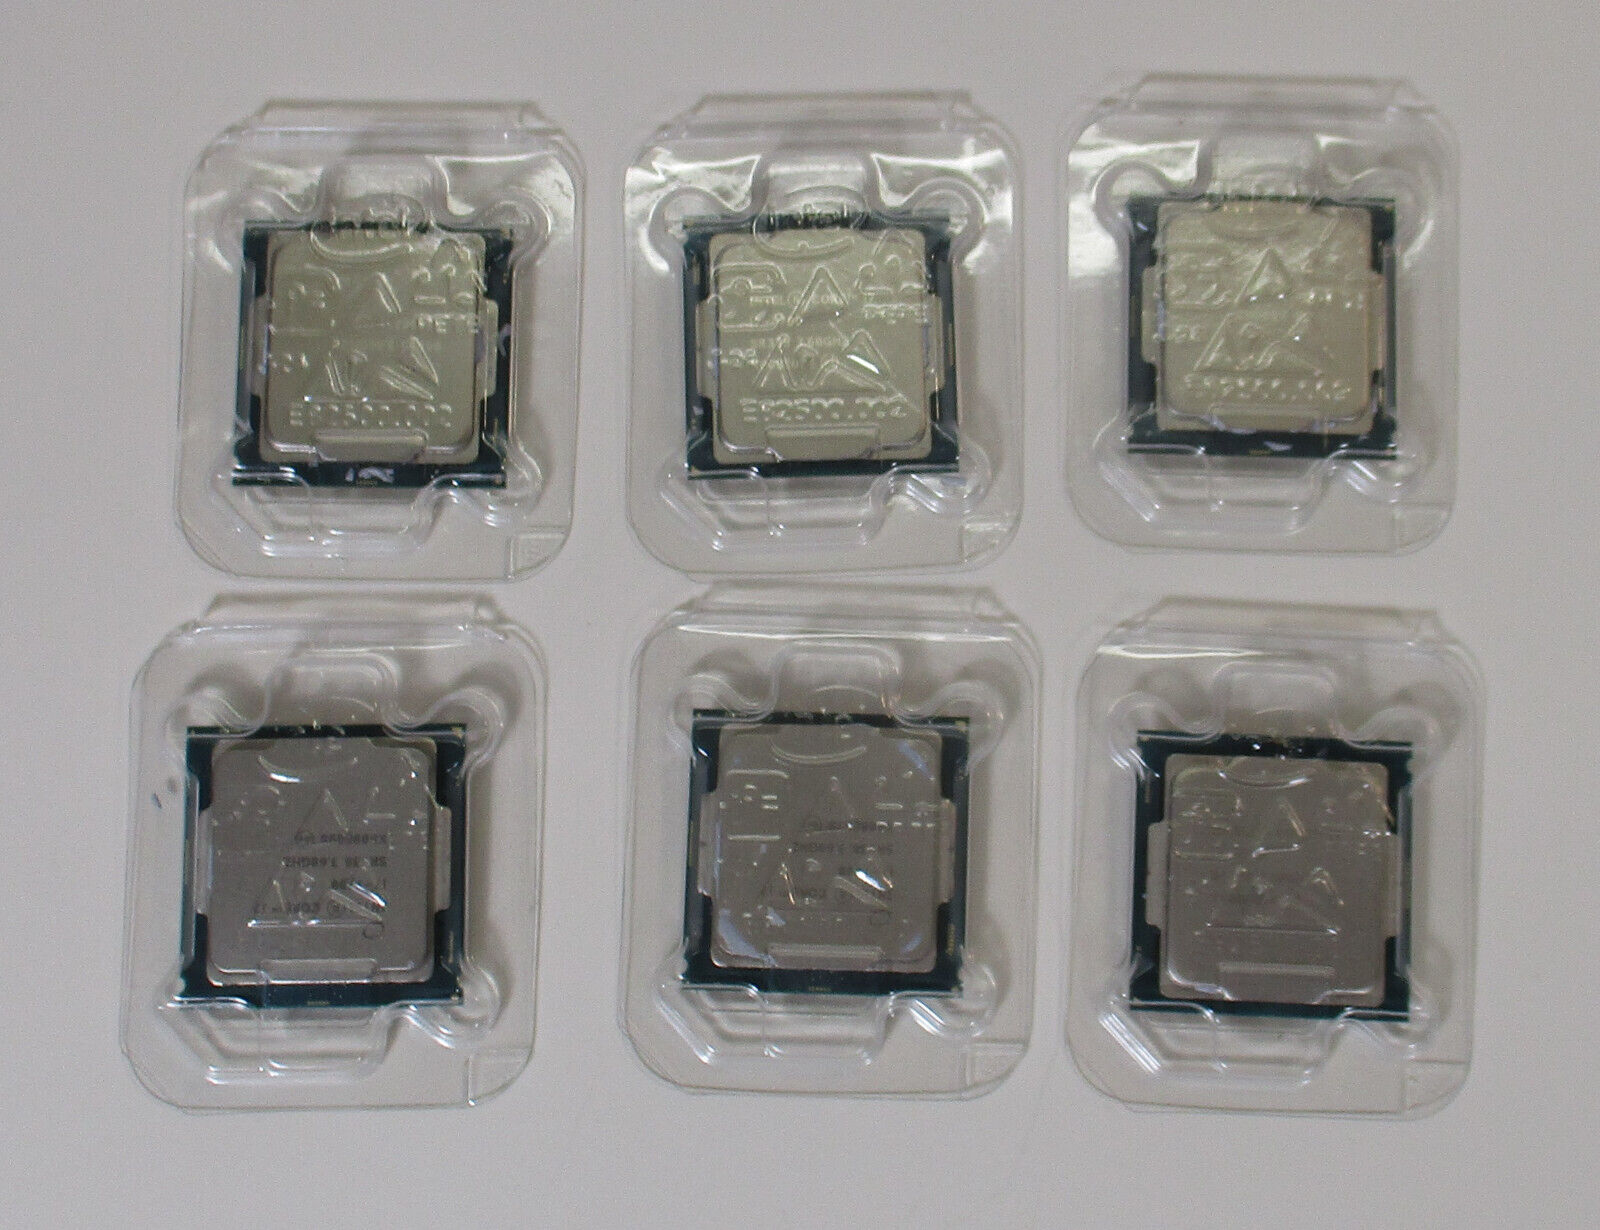 Lot of 6 - Intel Core i7-7700 CPU's